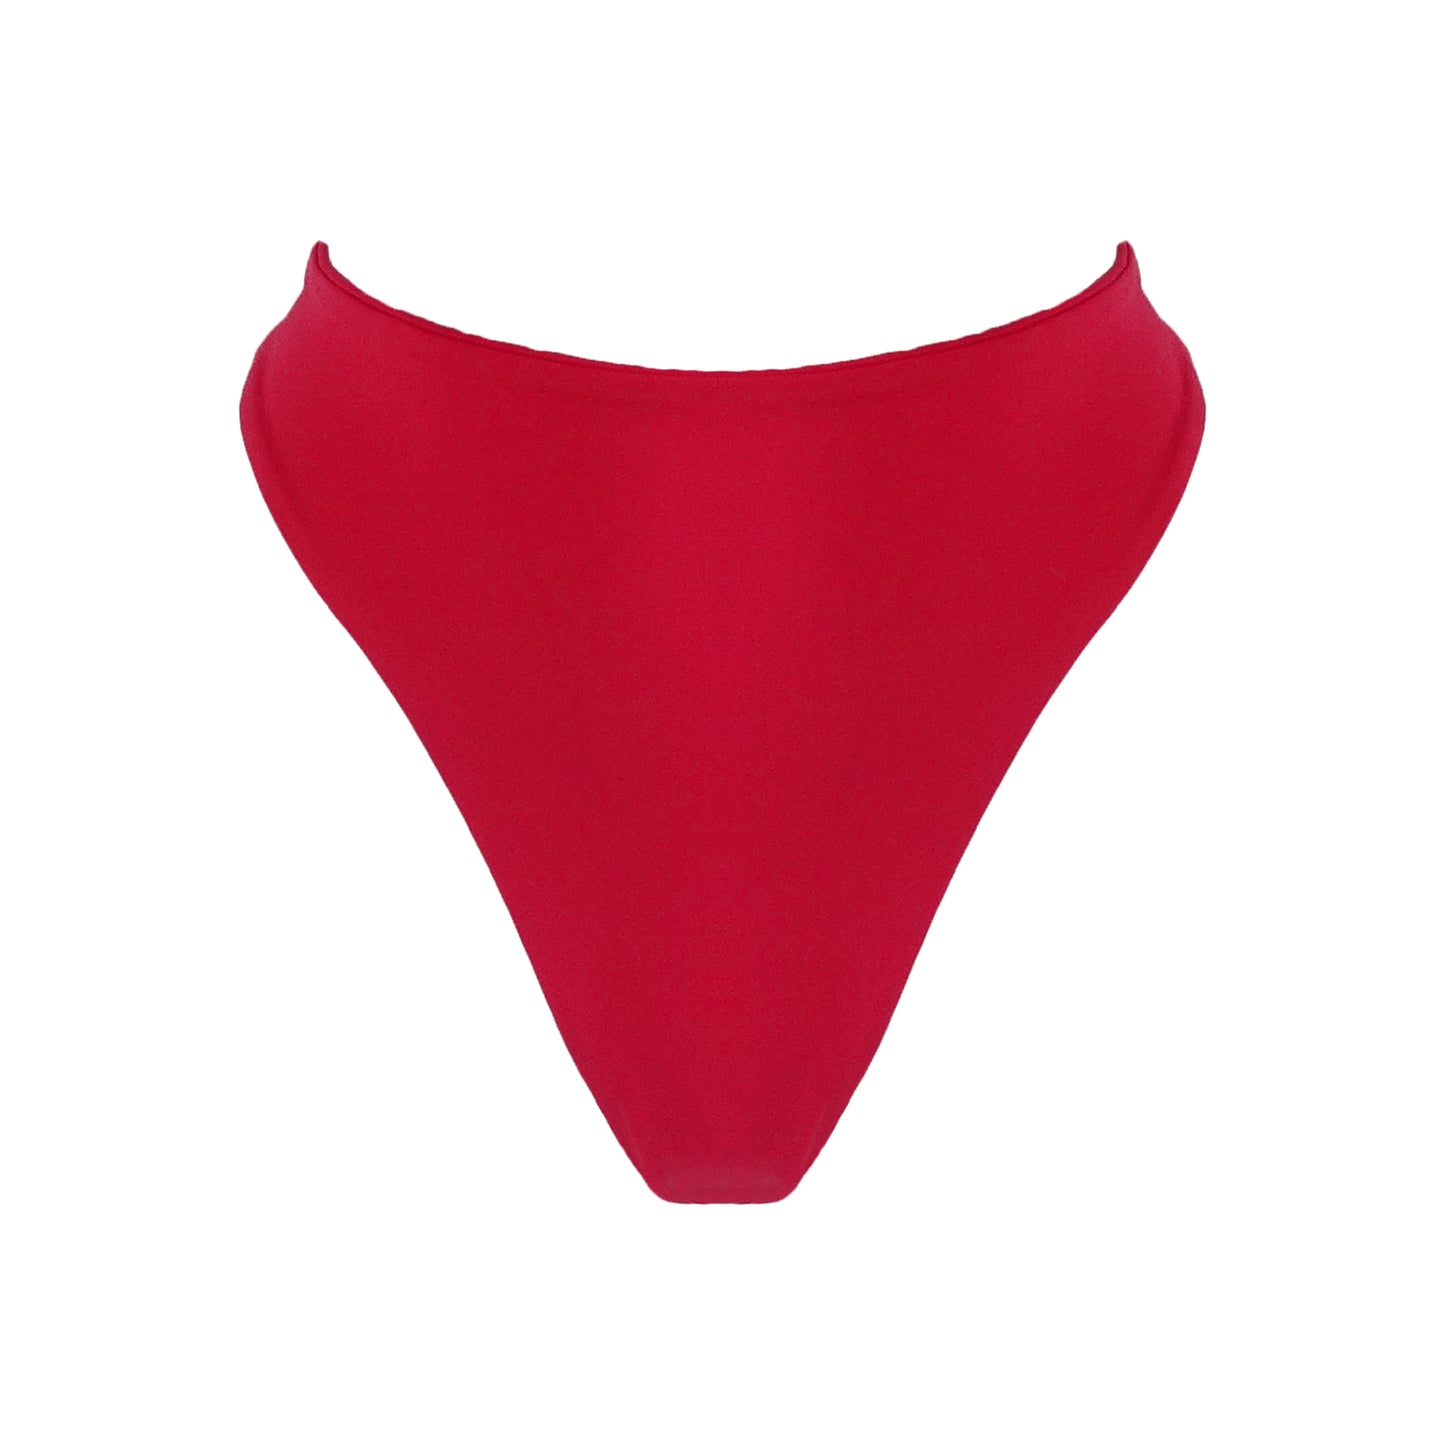 Red High waist thong bikini bottom with high cut legs and thong bum coverage.